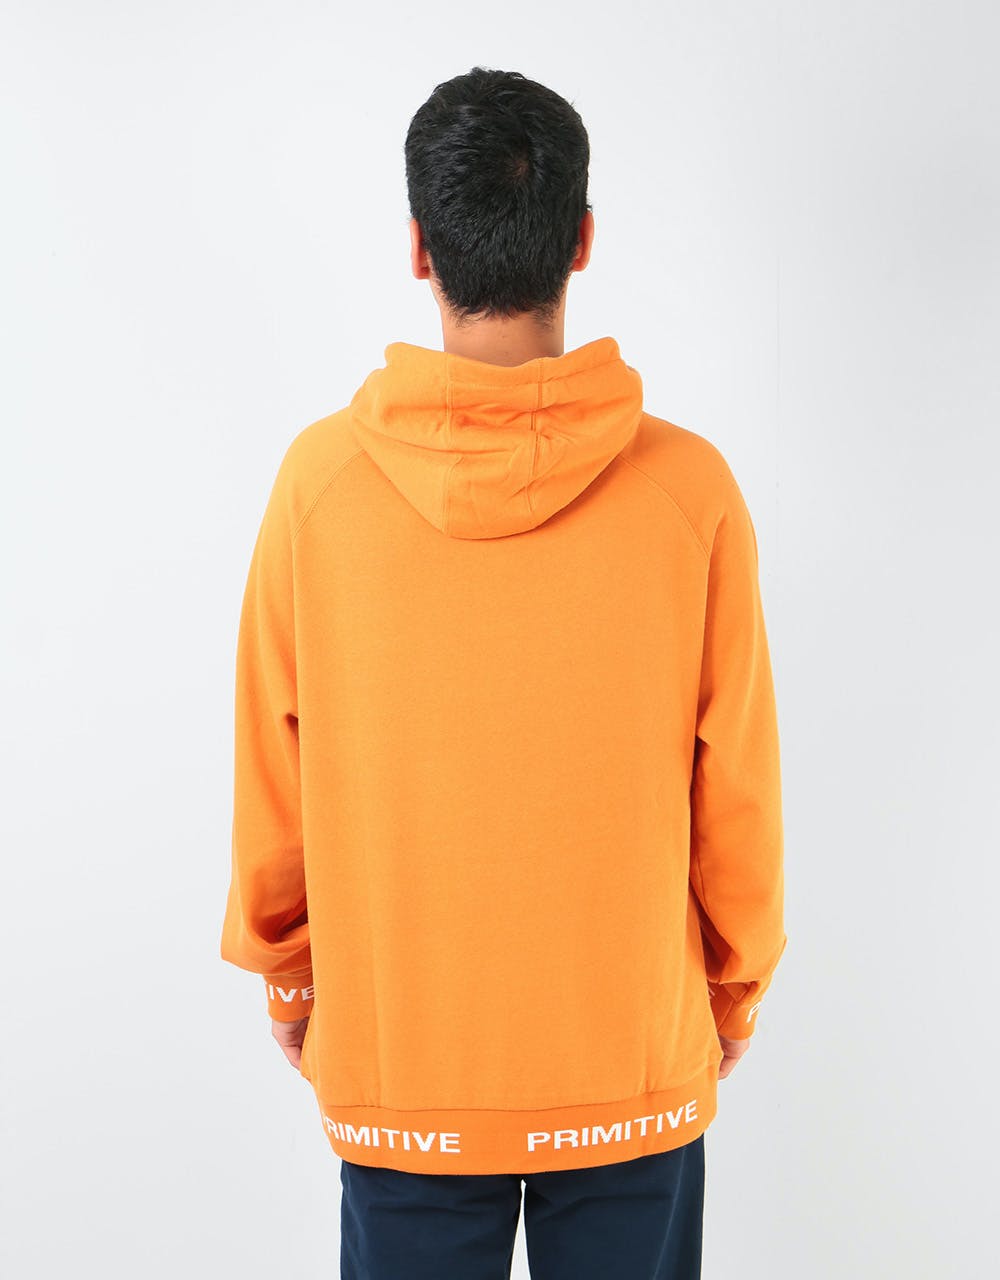 Primitive Shibuya Pullover Hoodie - Burnt Orange